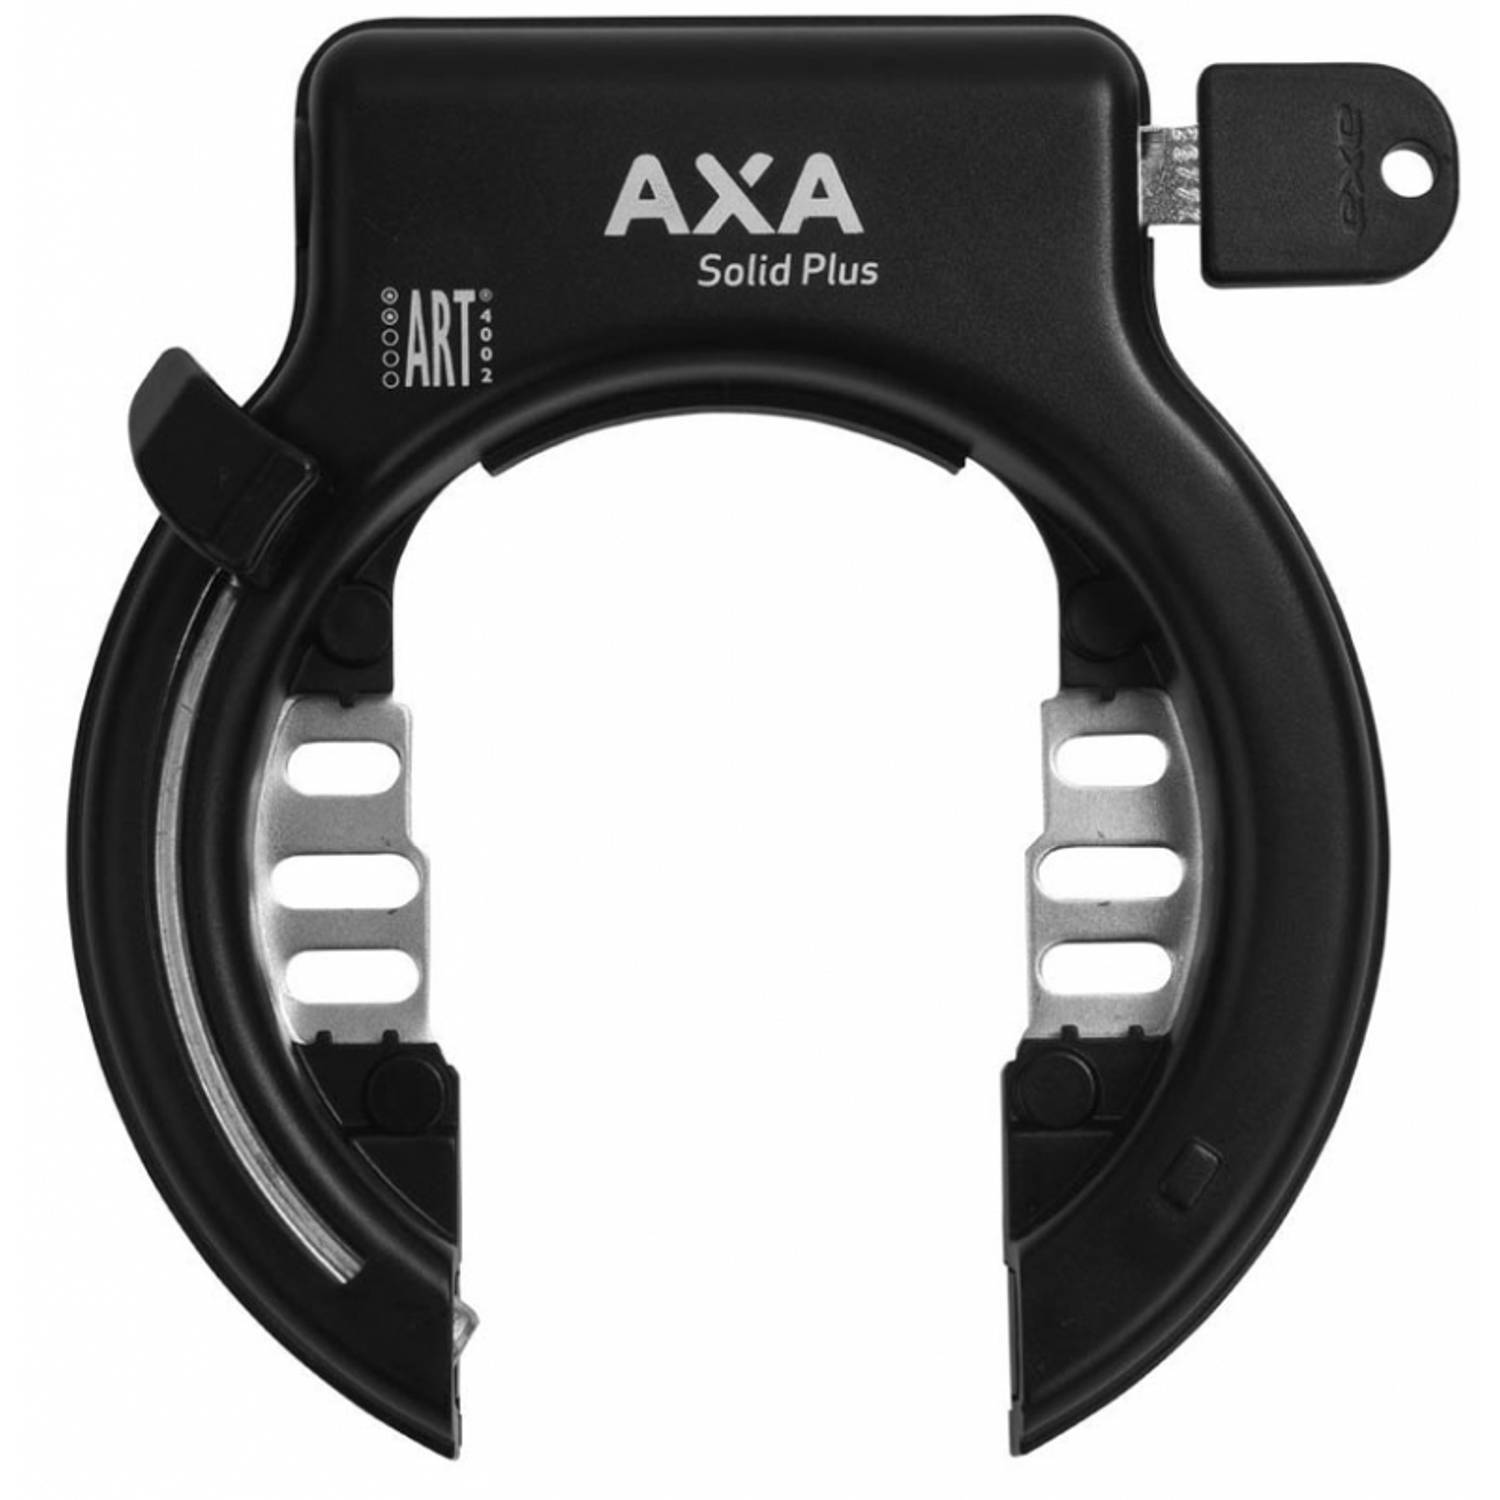 Axa Ringslot Solid Plus met uitneembare sleutels - zwart (werkplaatsverpakking)